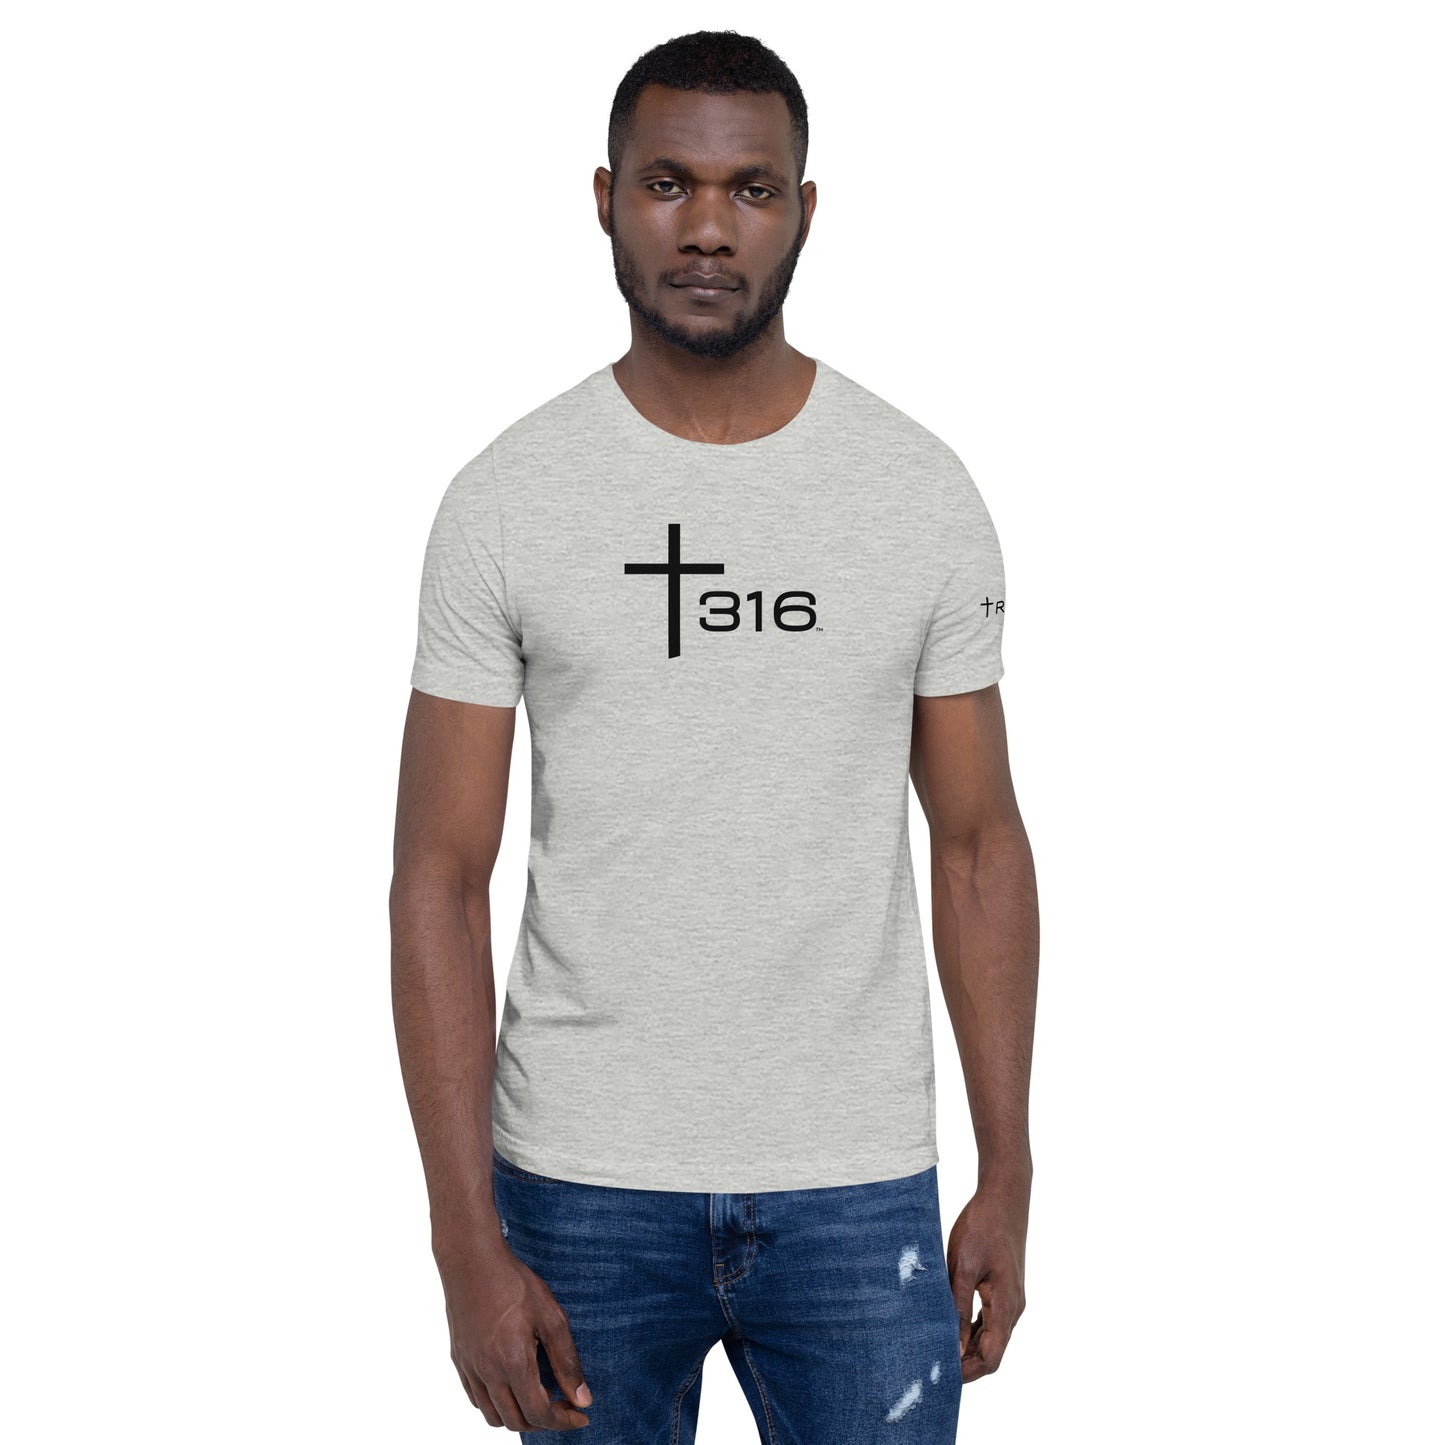 Trinity 316 ICON T-Shirt - Grey Heather